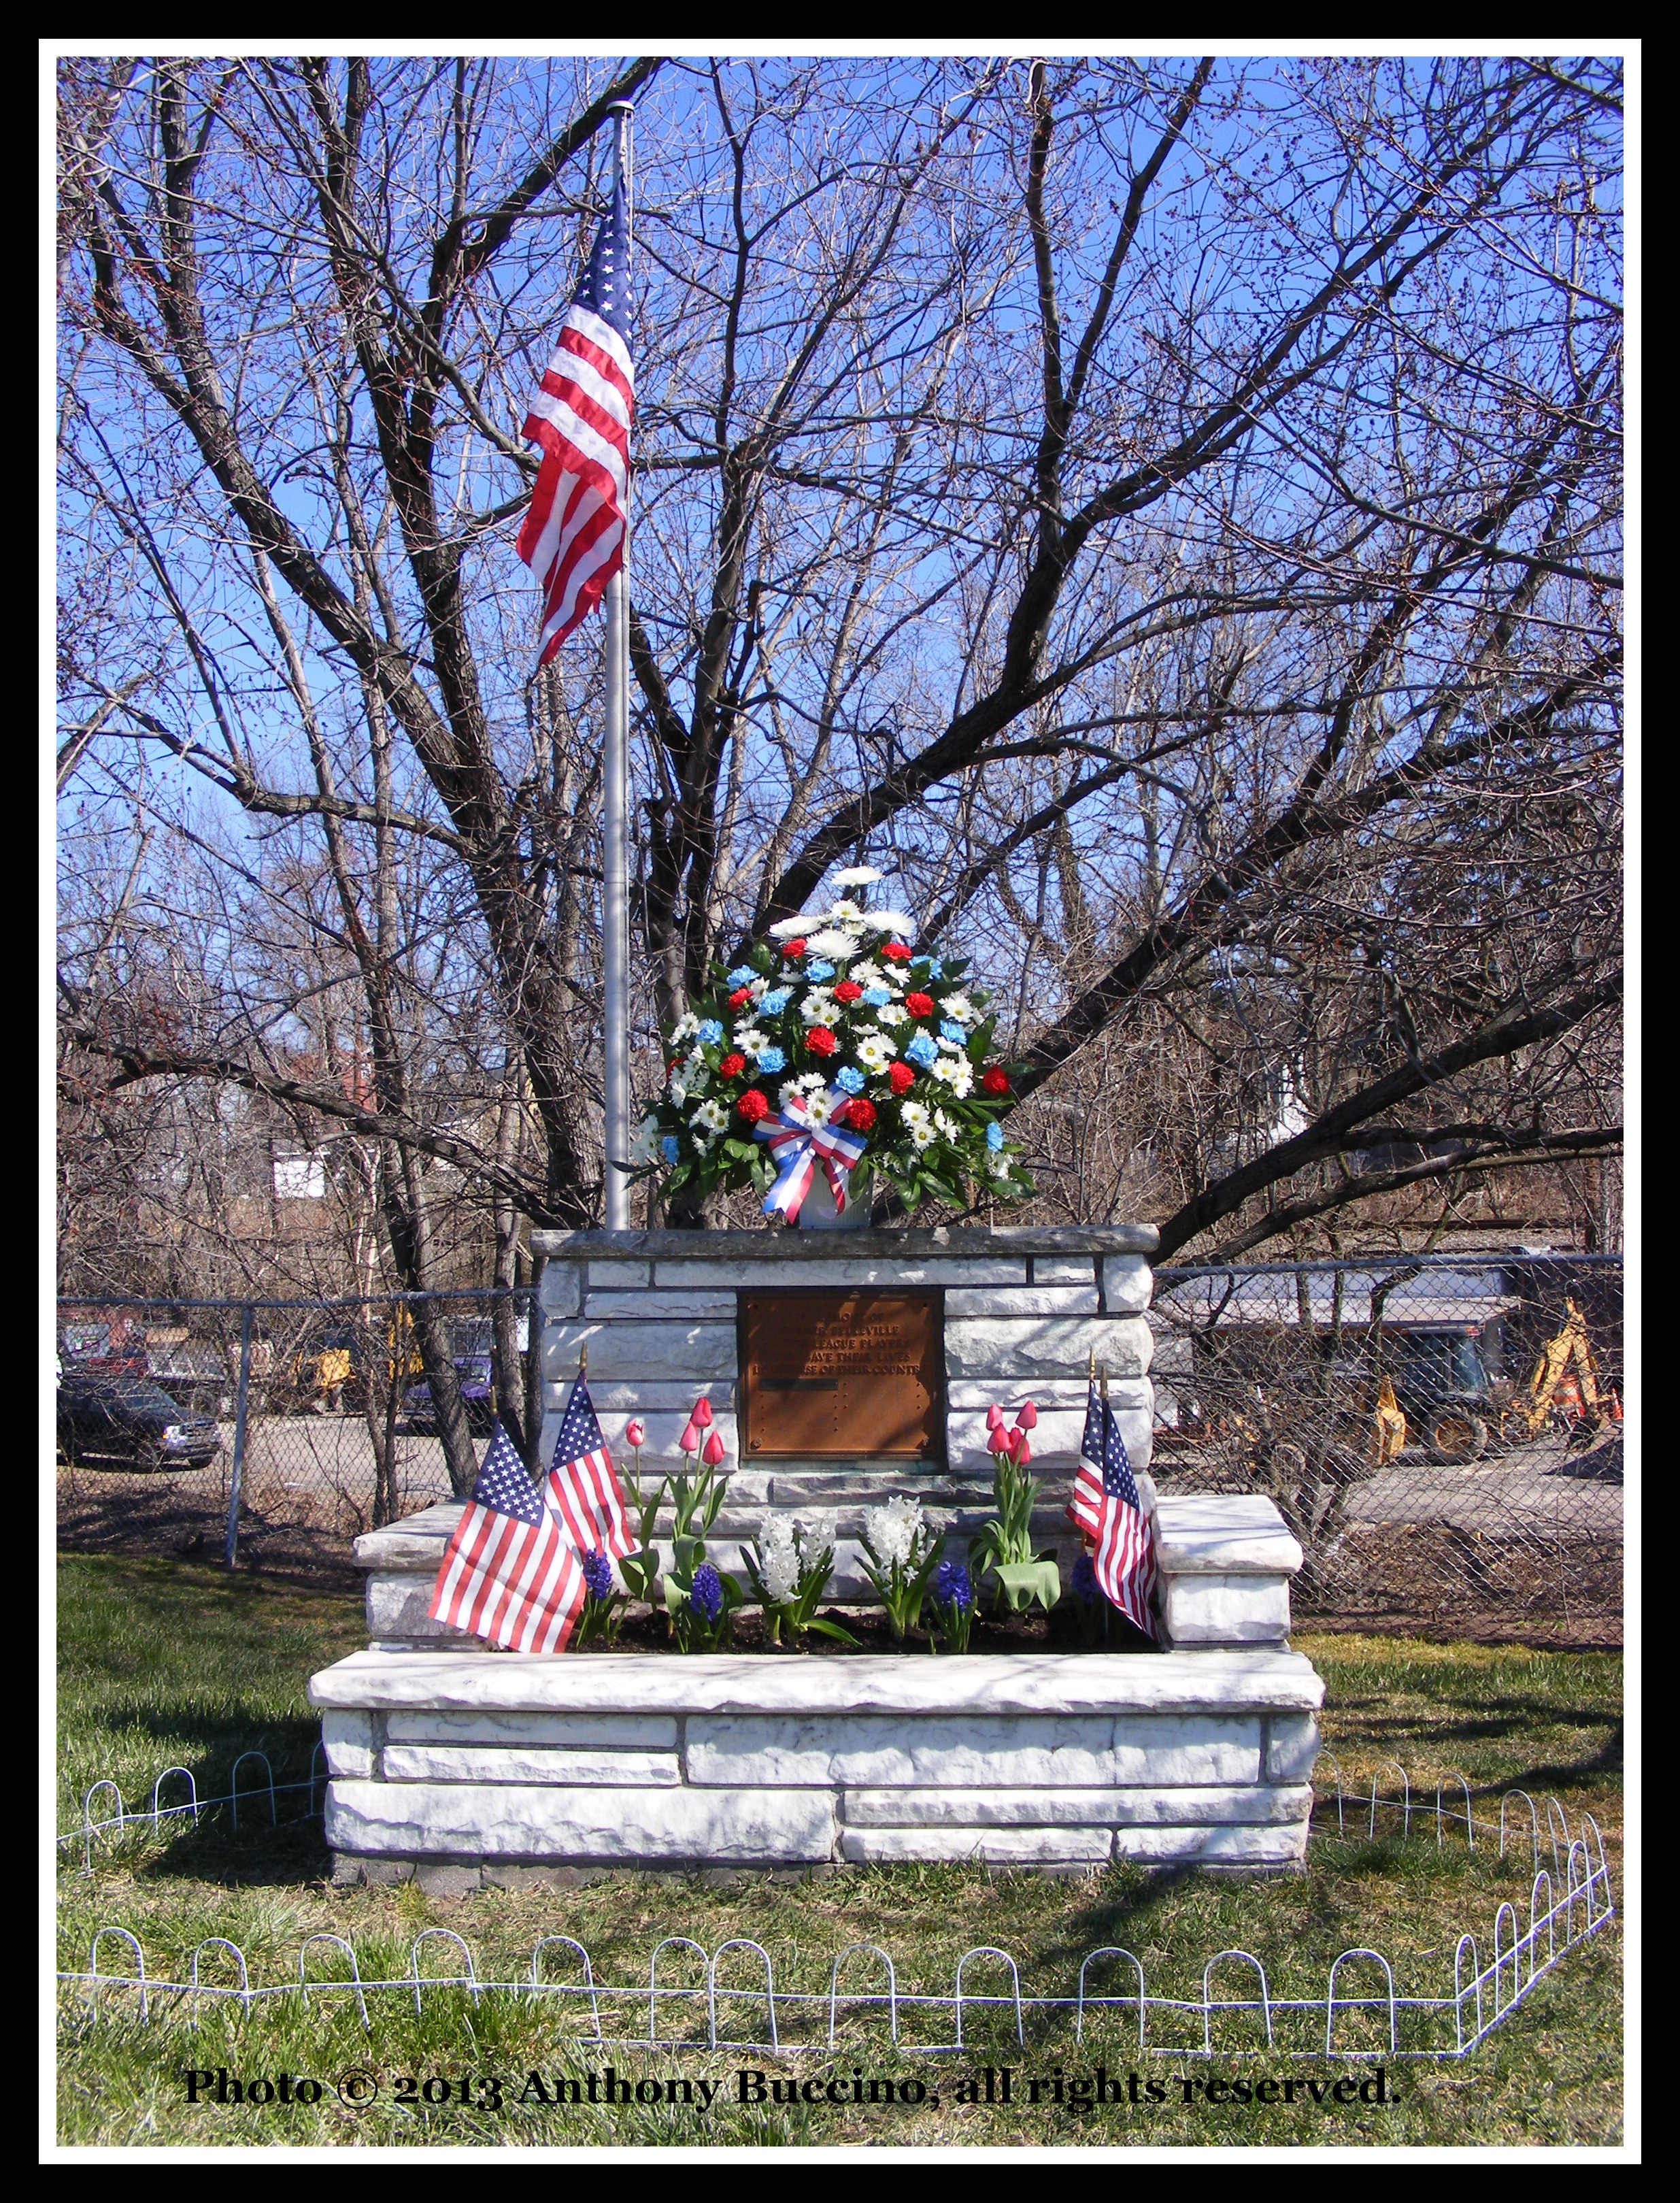 Roger Crowell, Little League Memorial, Belleville, NJ, KIA Vietnam, Copyright  2013 by Anthony Buccino